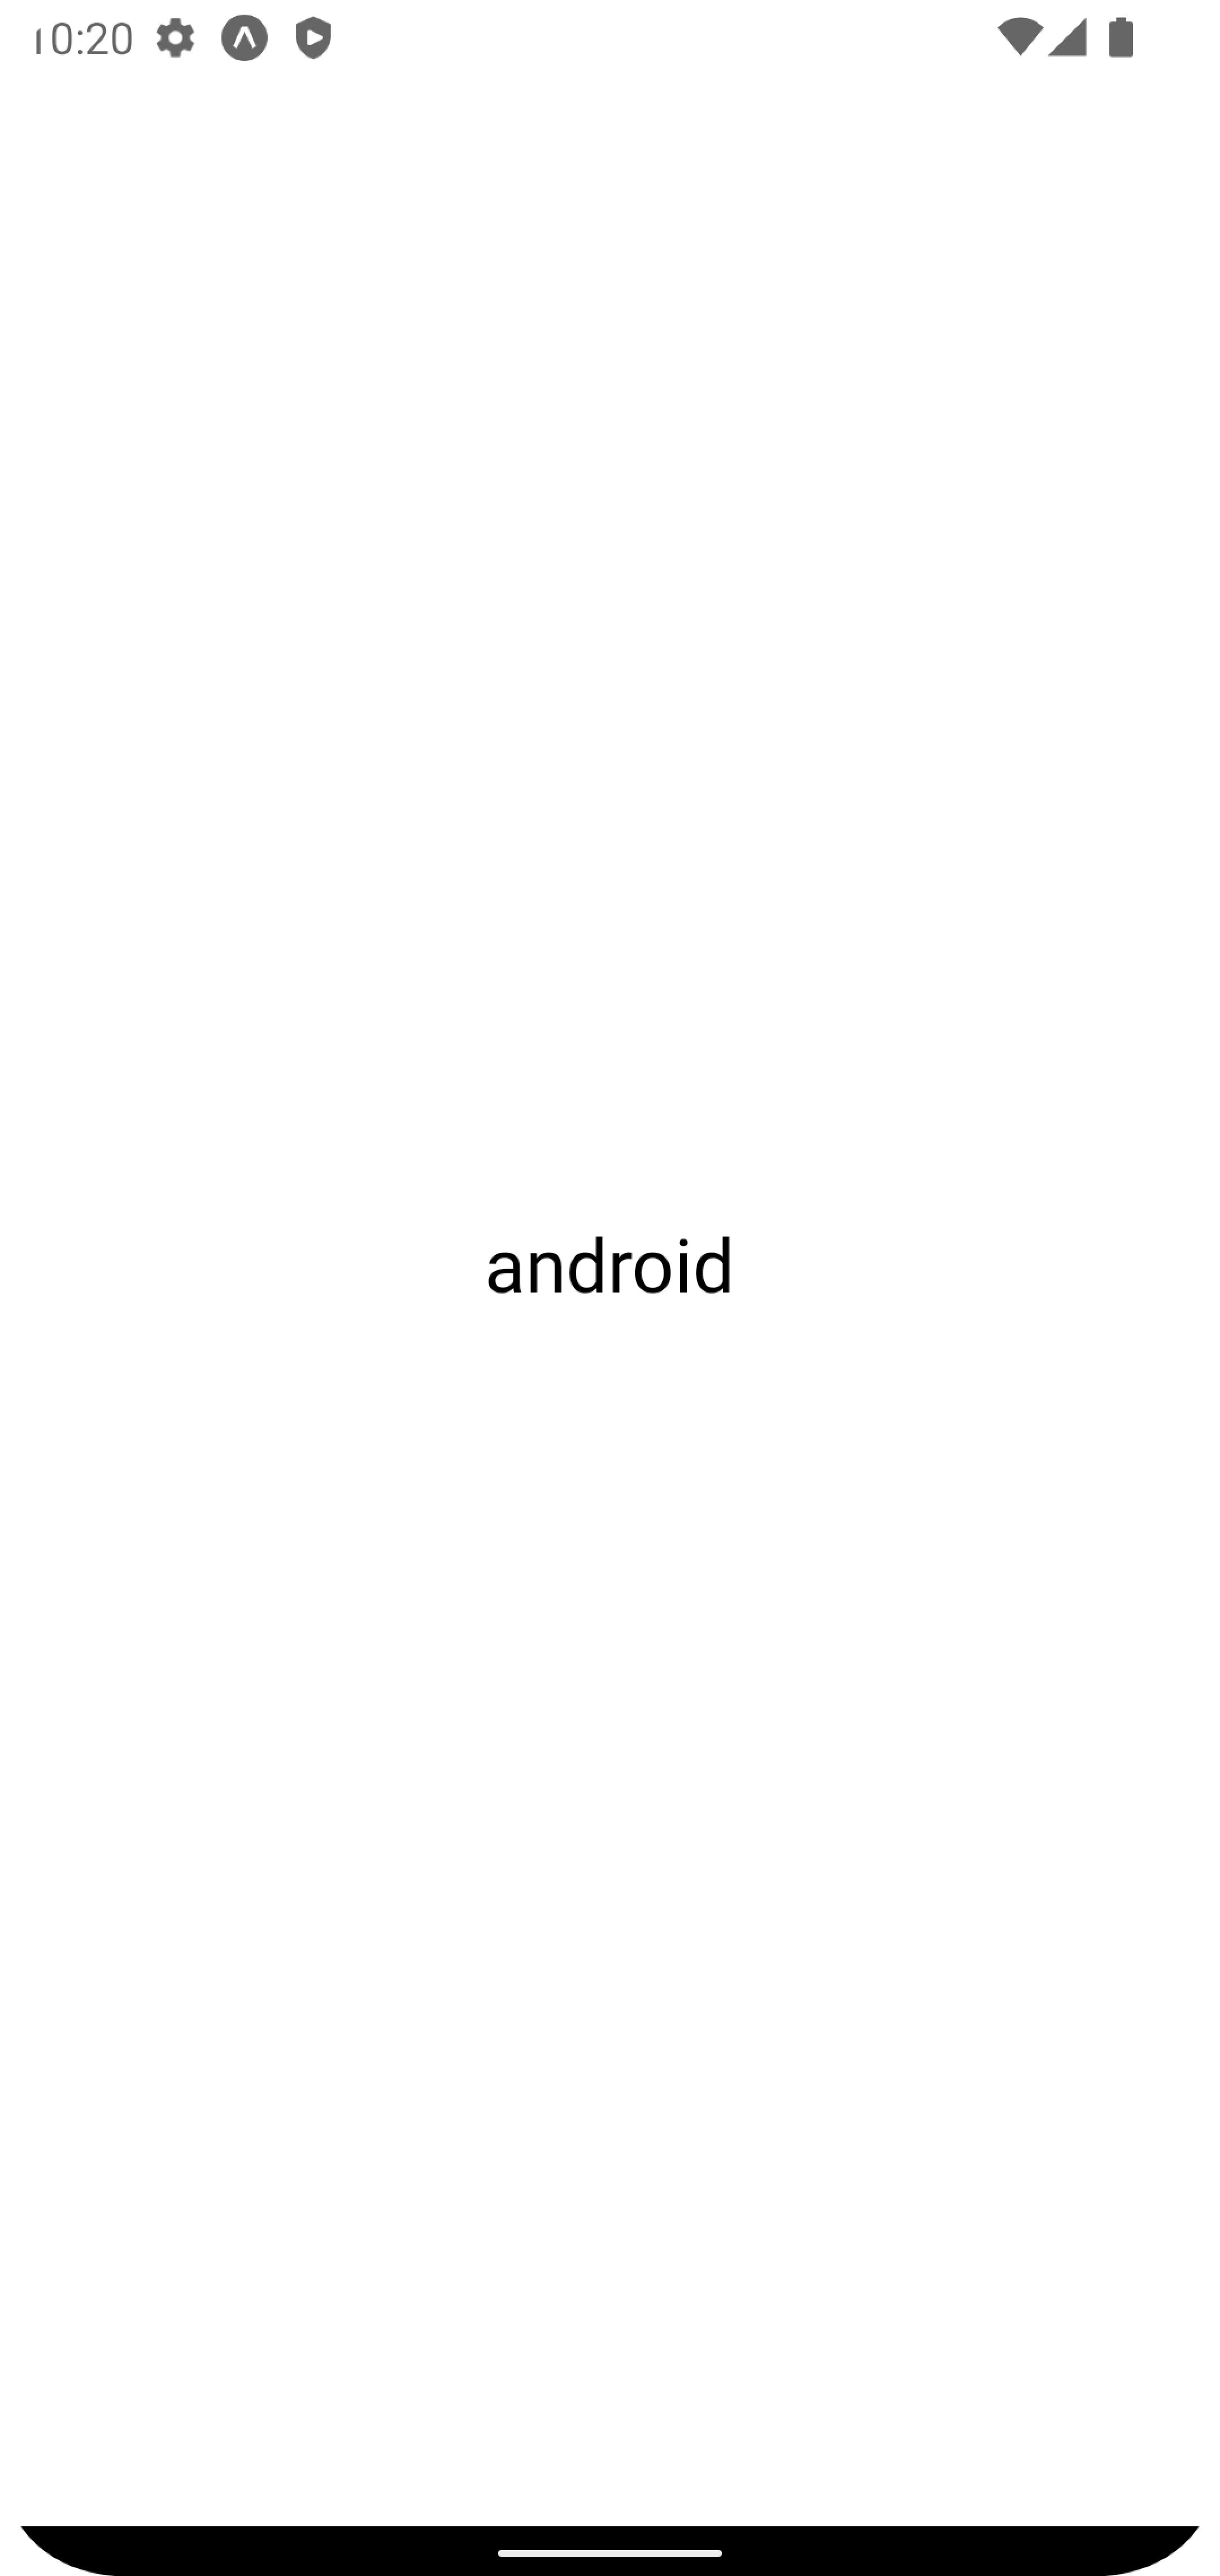 Platform.OS result on Android